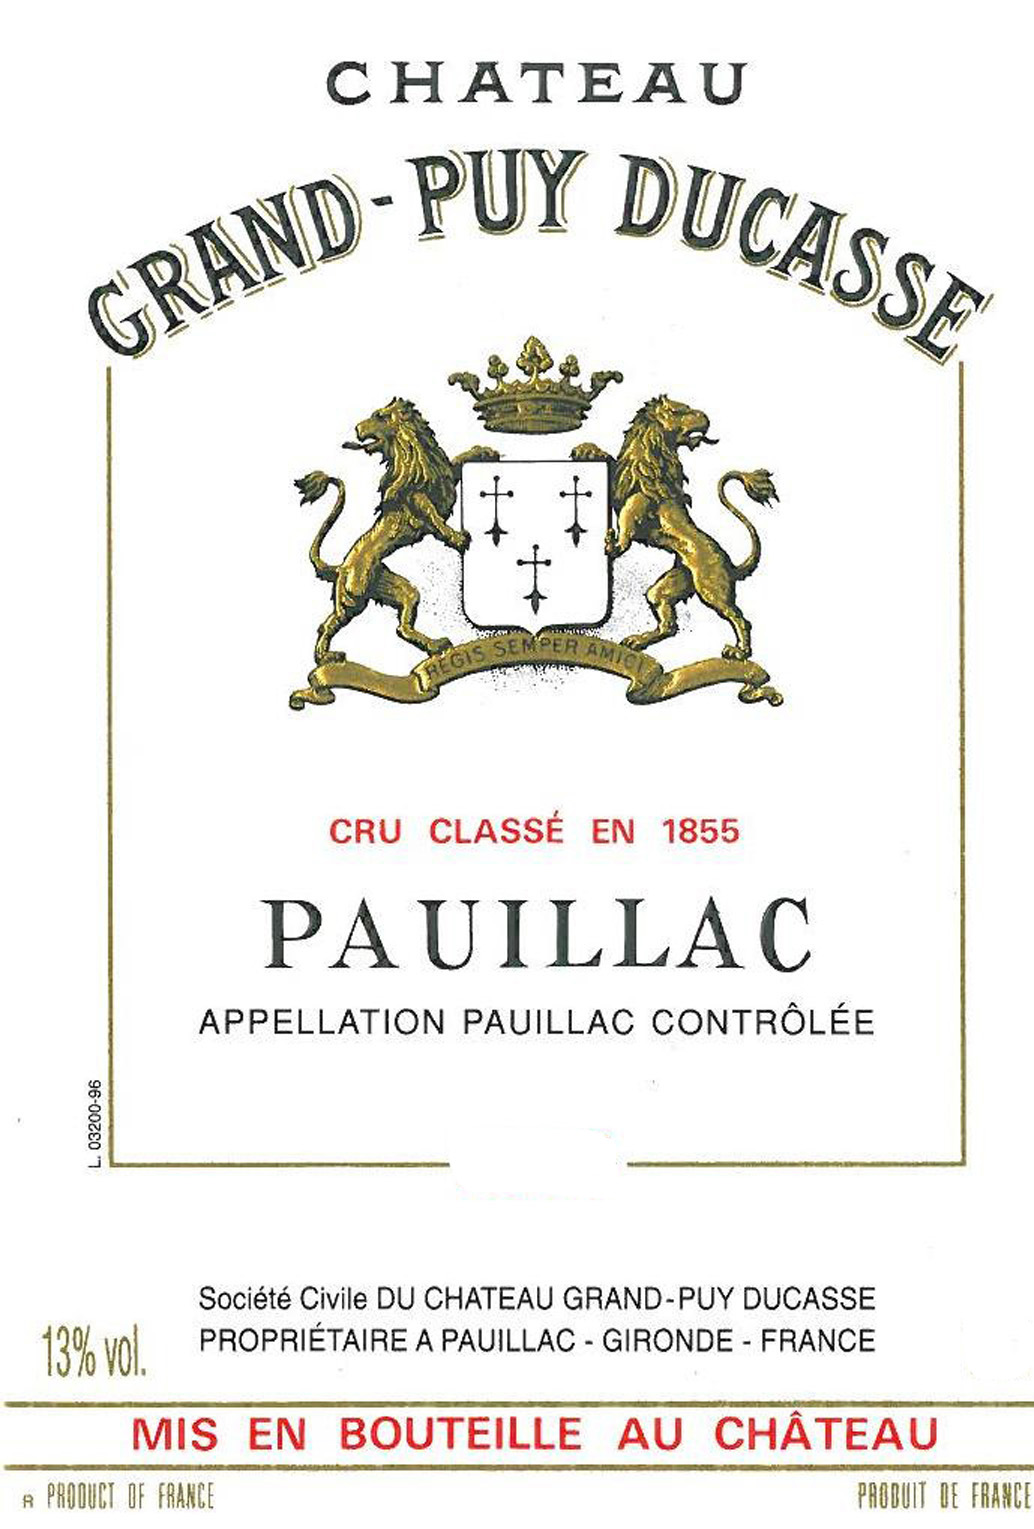 Chateau Grand-Puy Ducasse label